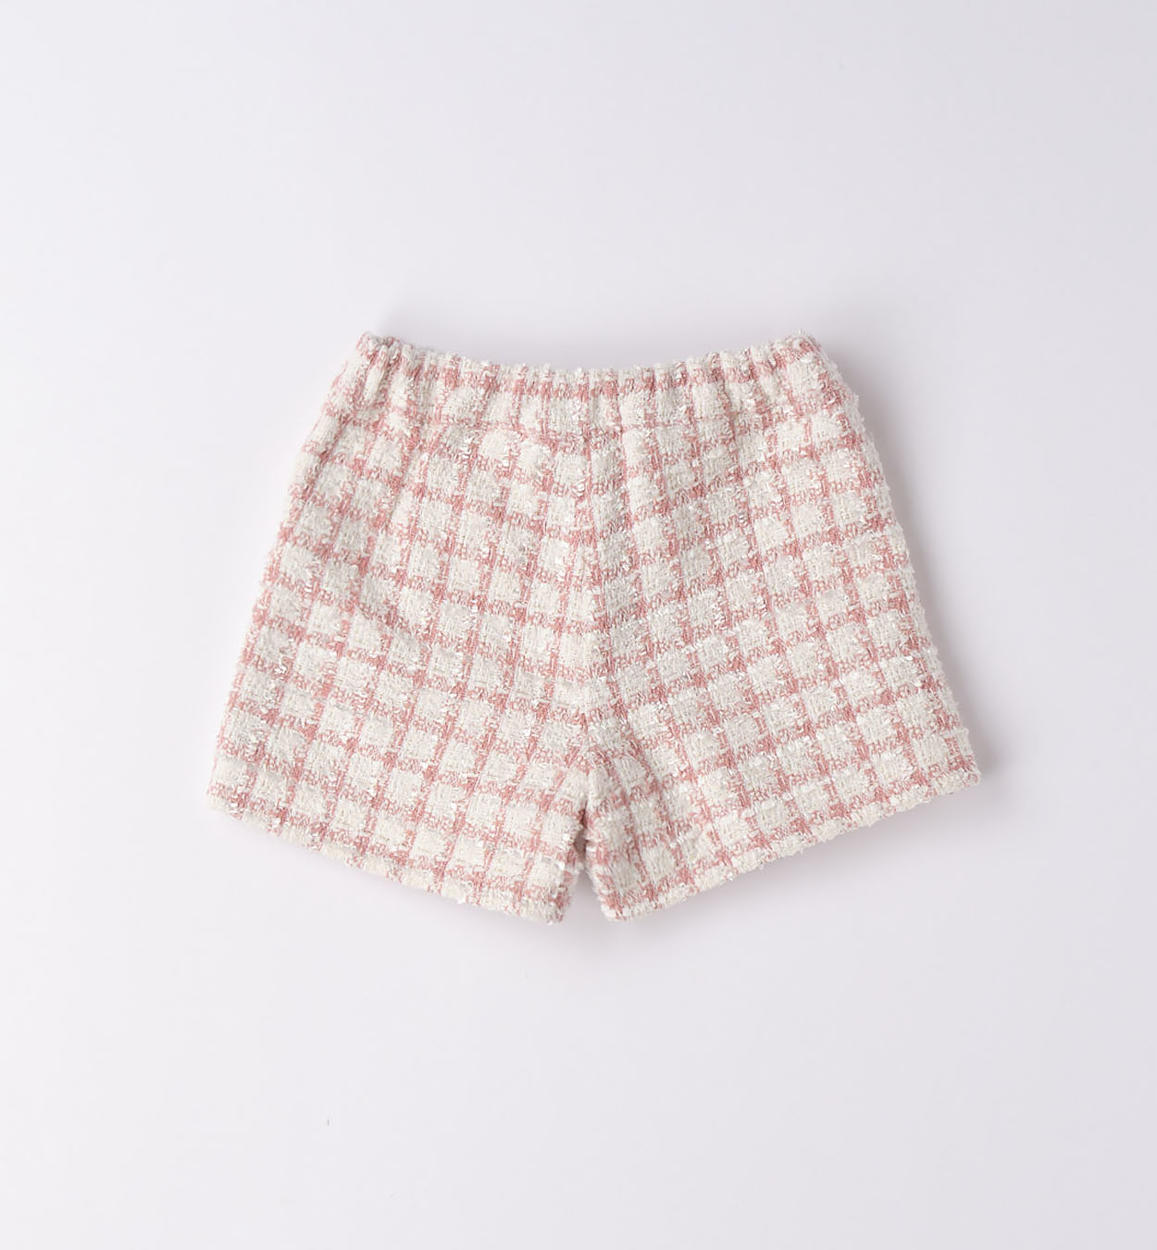 Bermuda shorts  Cotton  mixed fibres light pink  Fashion  CHANEL